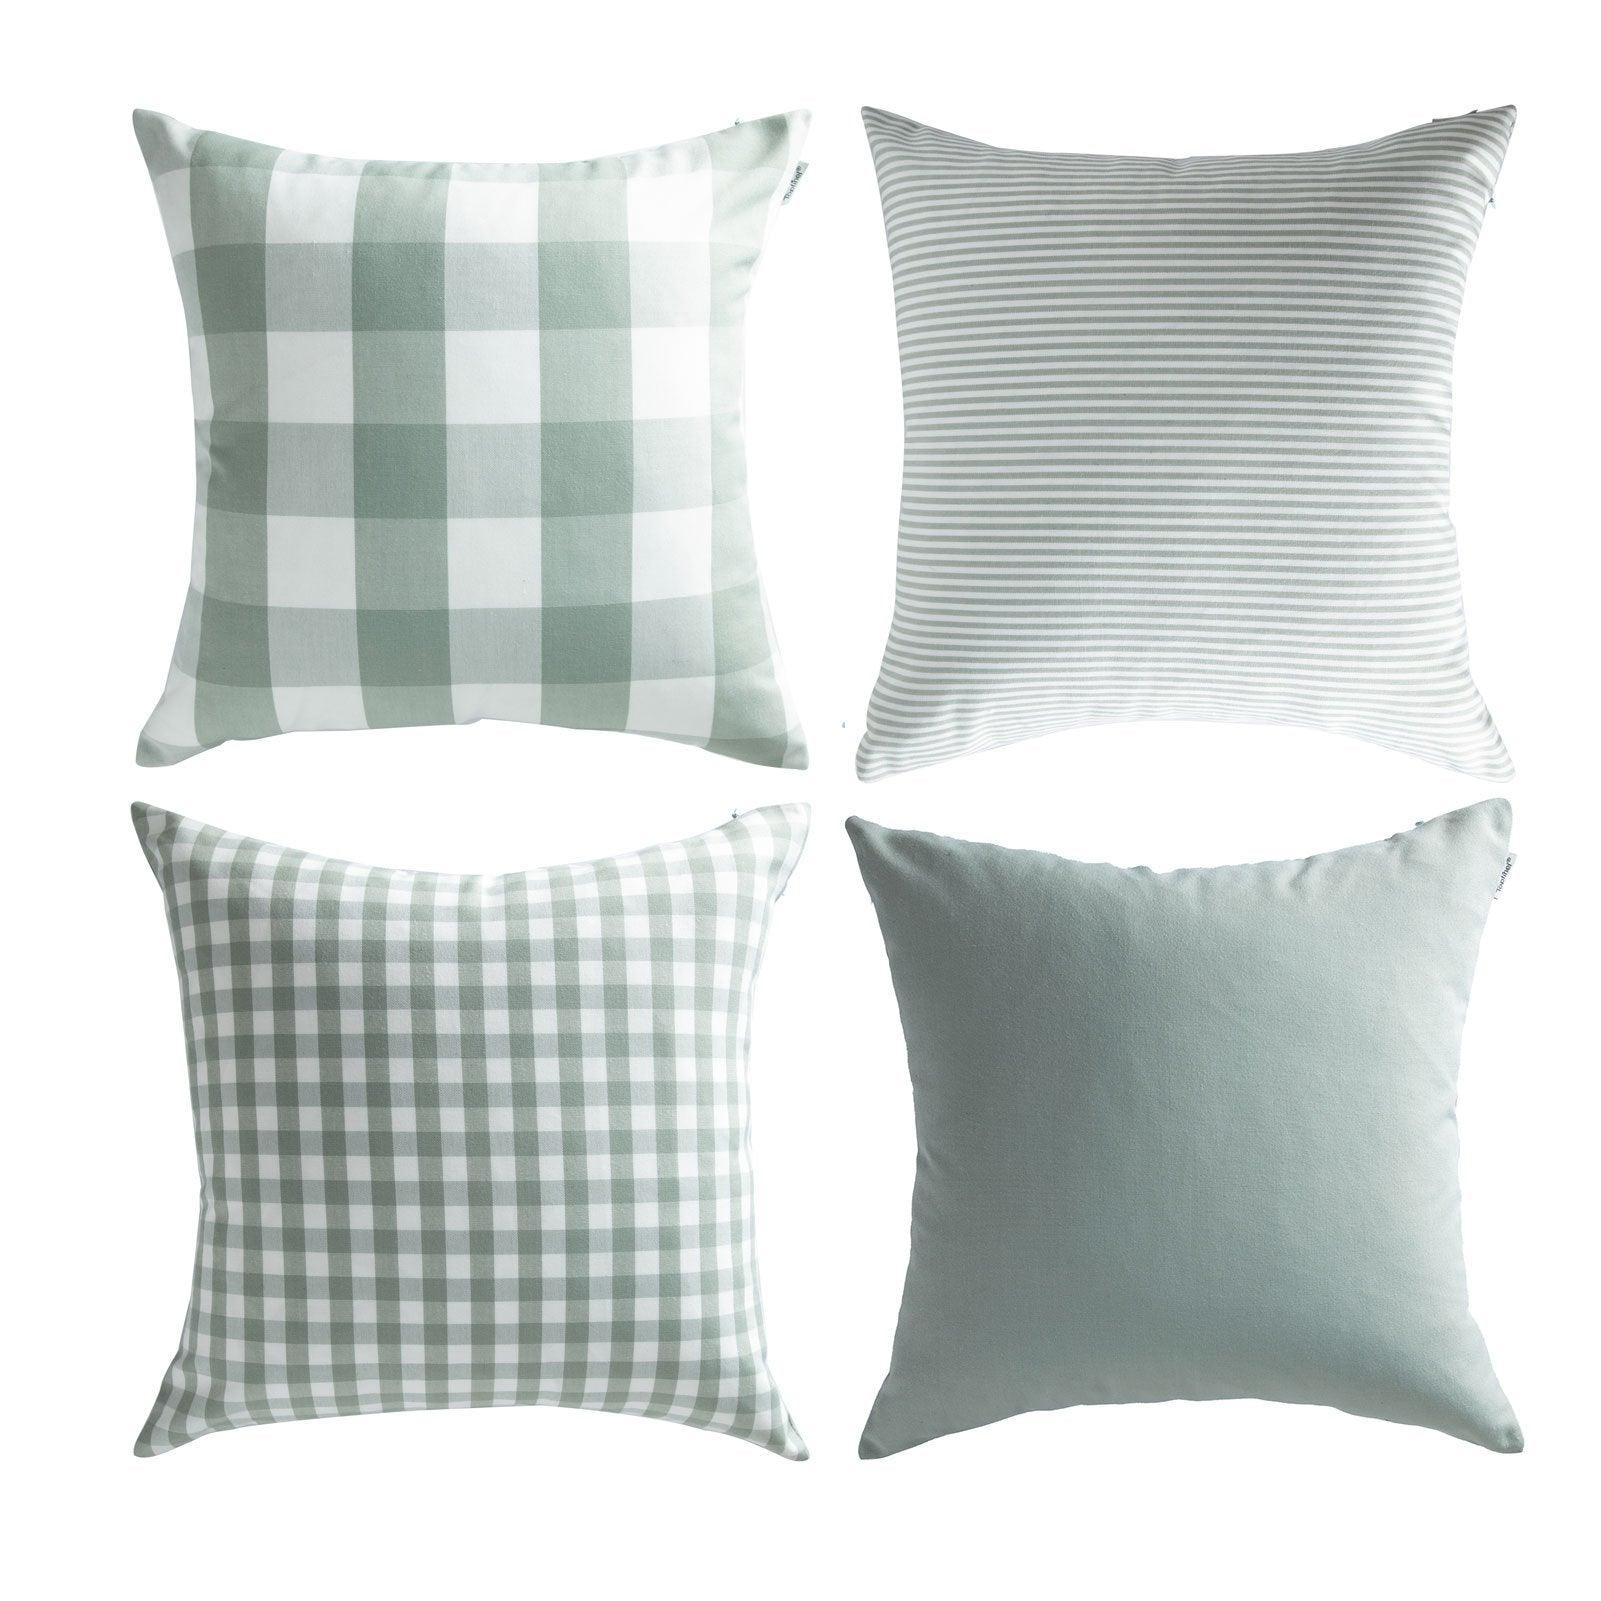 Buffalo Check Plaid Canvas Striped Decorative pillow covers 20x20 for Sofa Chair-4 Packs - Topfinel